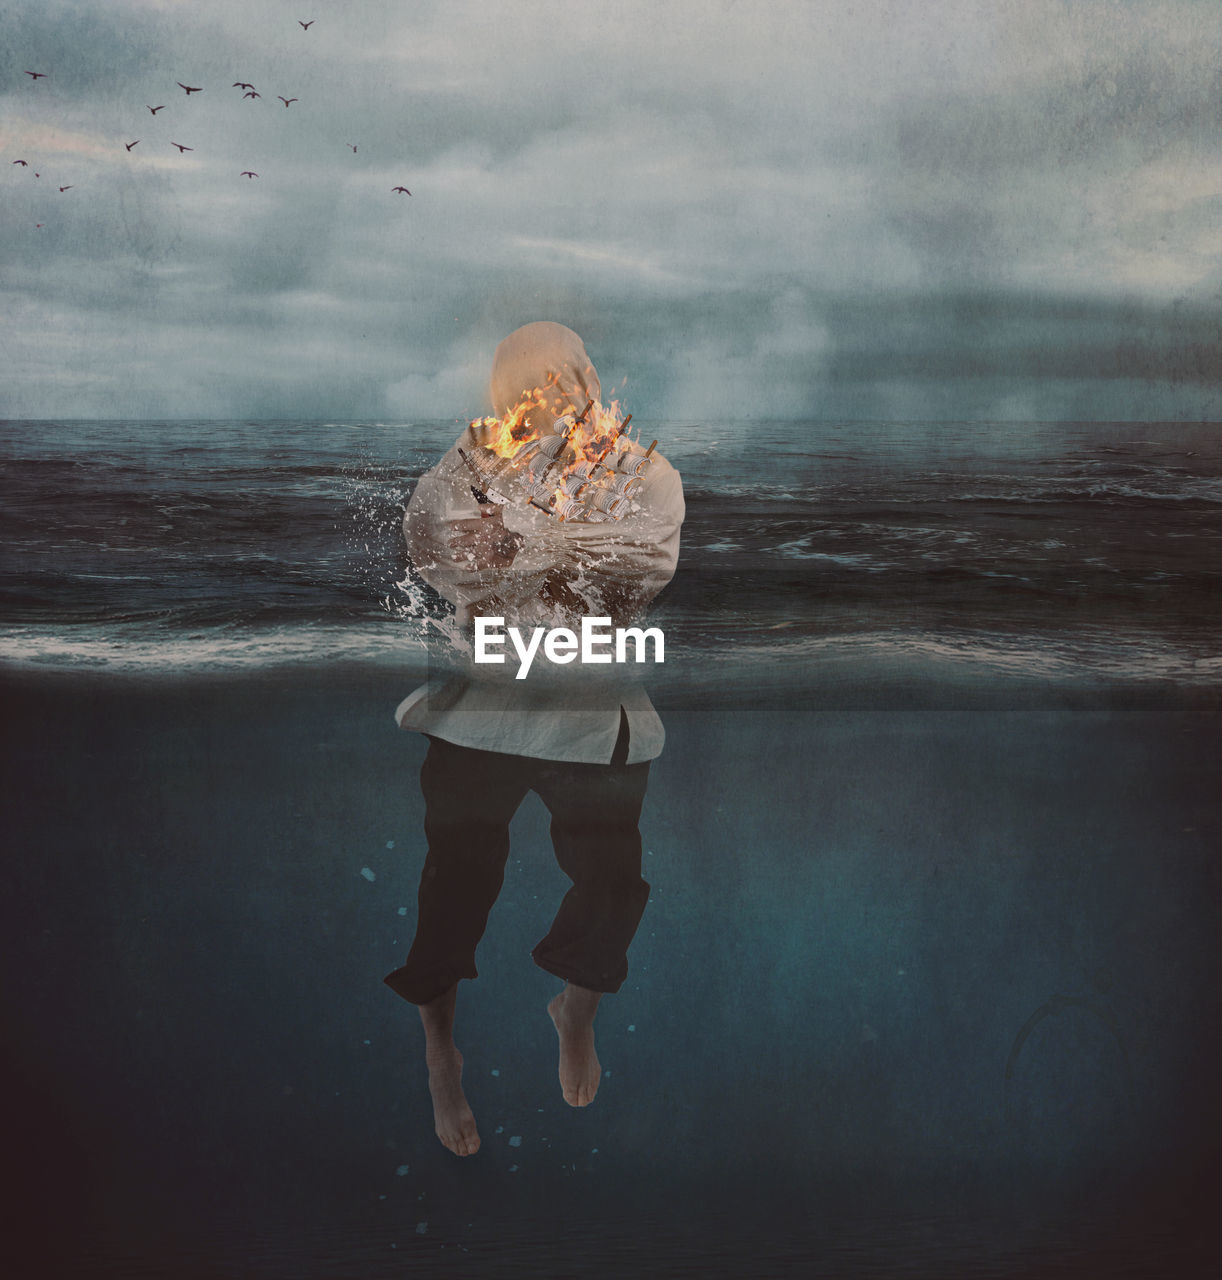 Digital composite image of man standing in sea